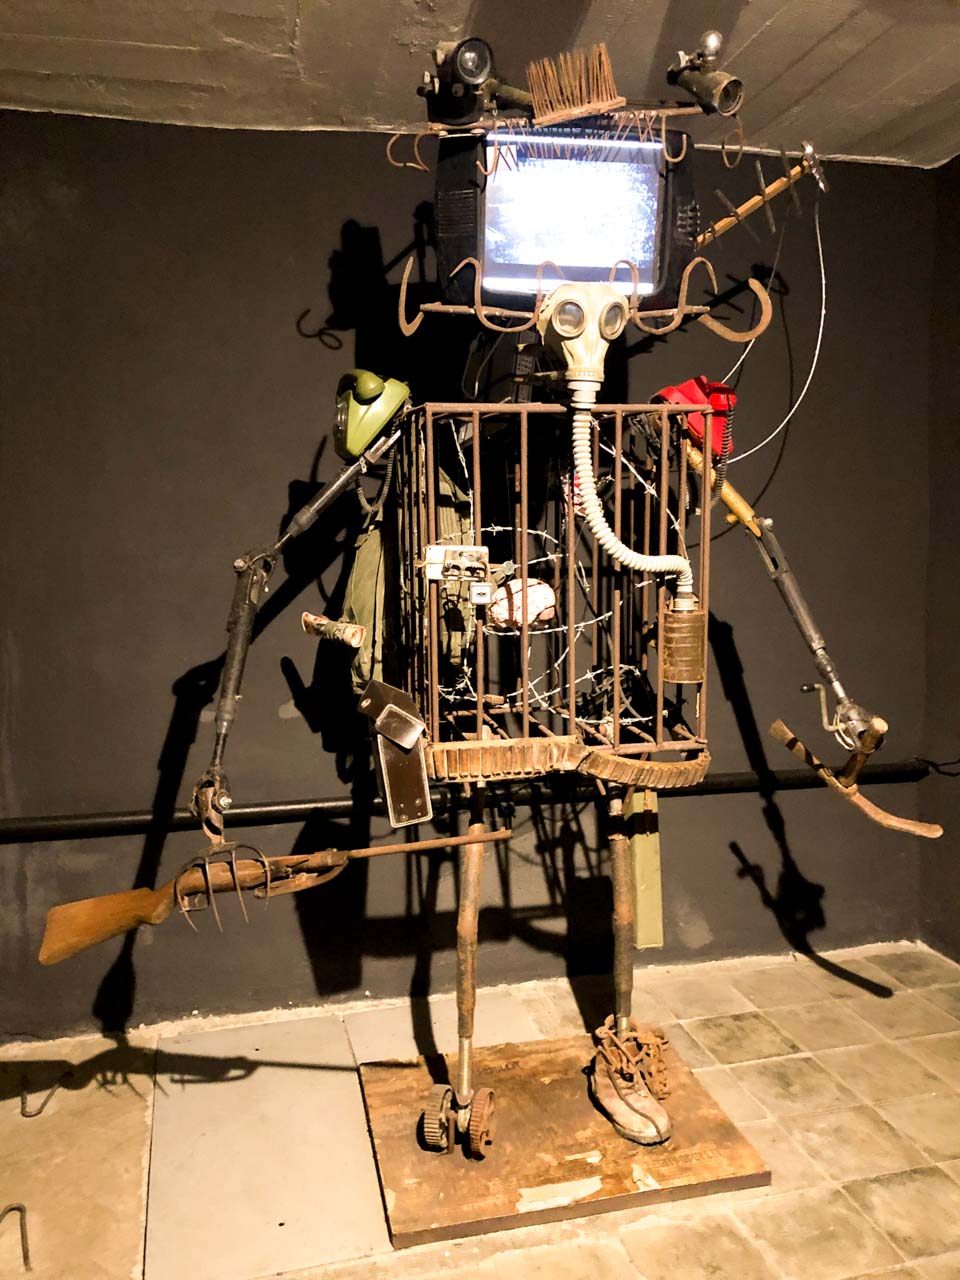 Robot on display at Bunk'Art 2 in Tirana, Albania